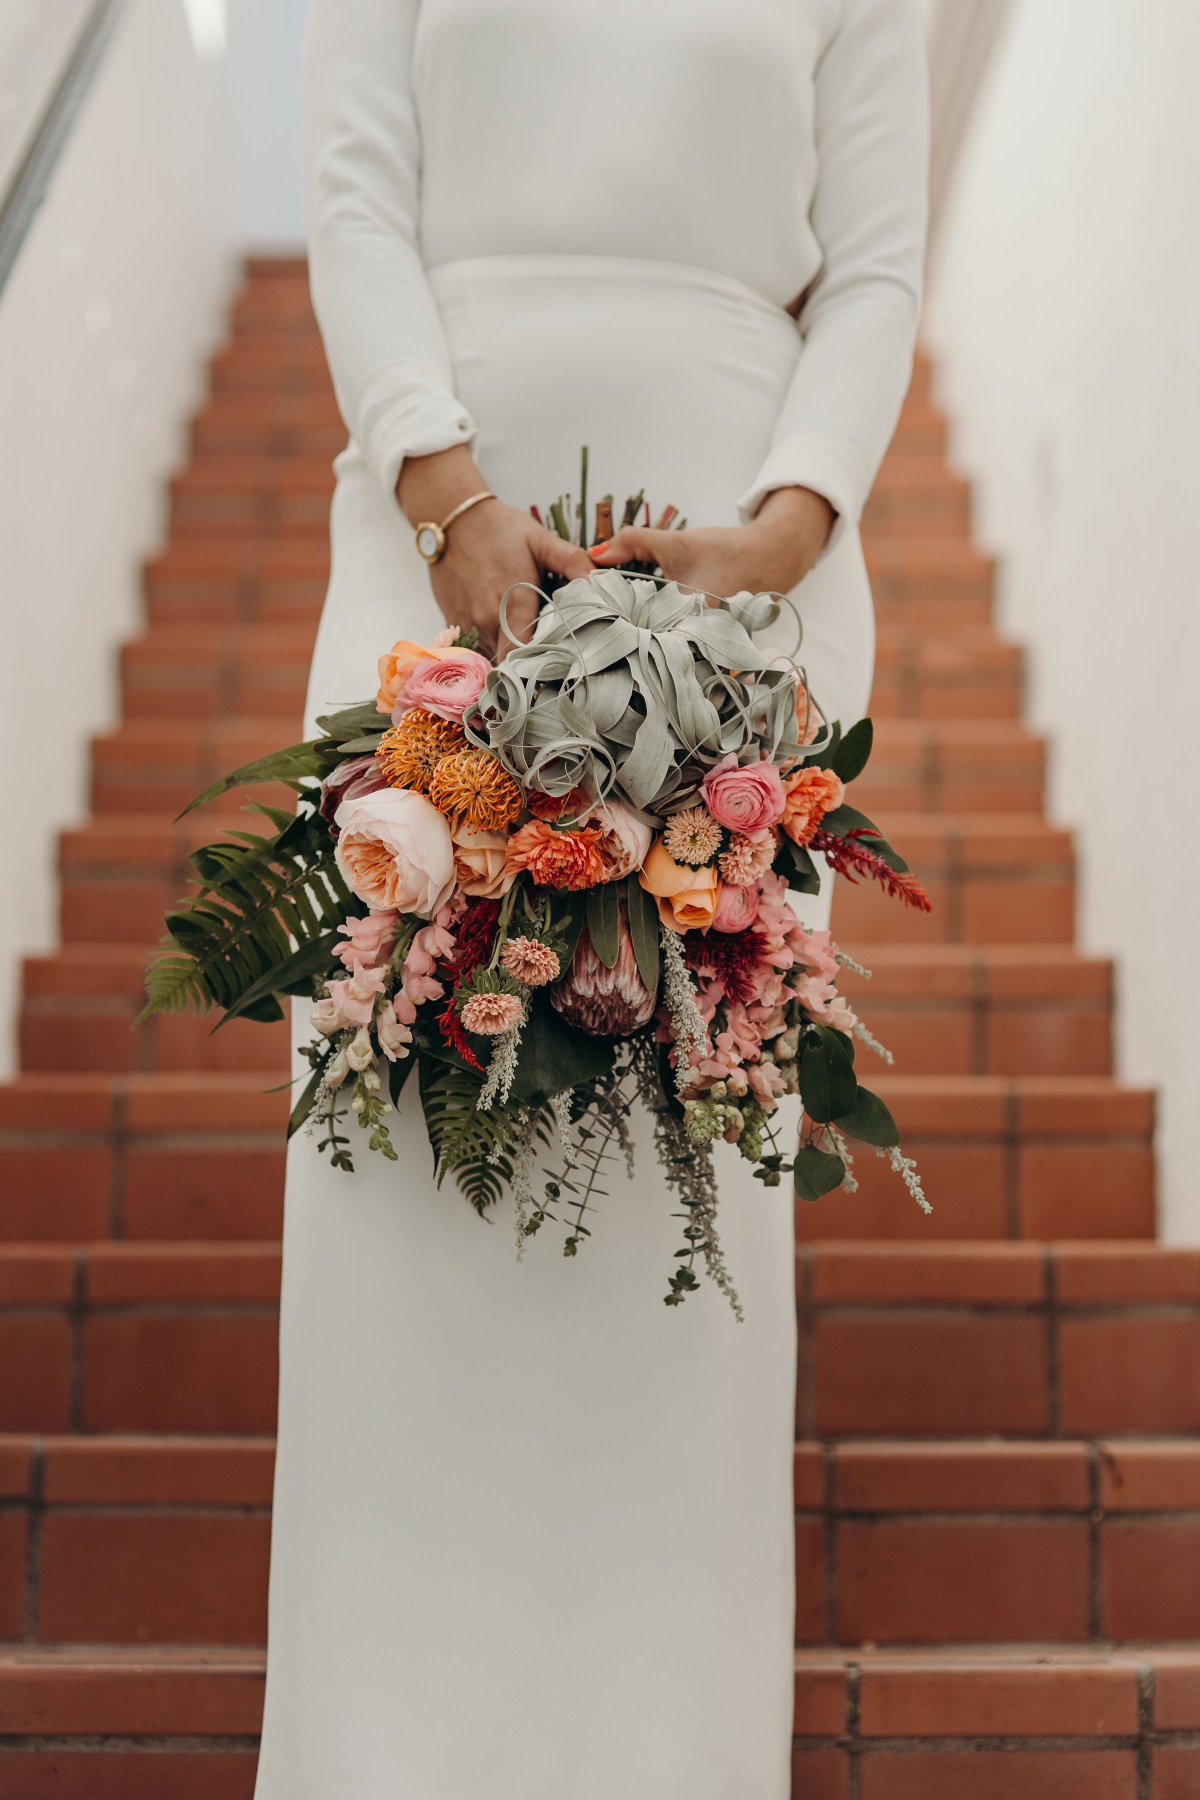 Air plant wedding bouquet